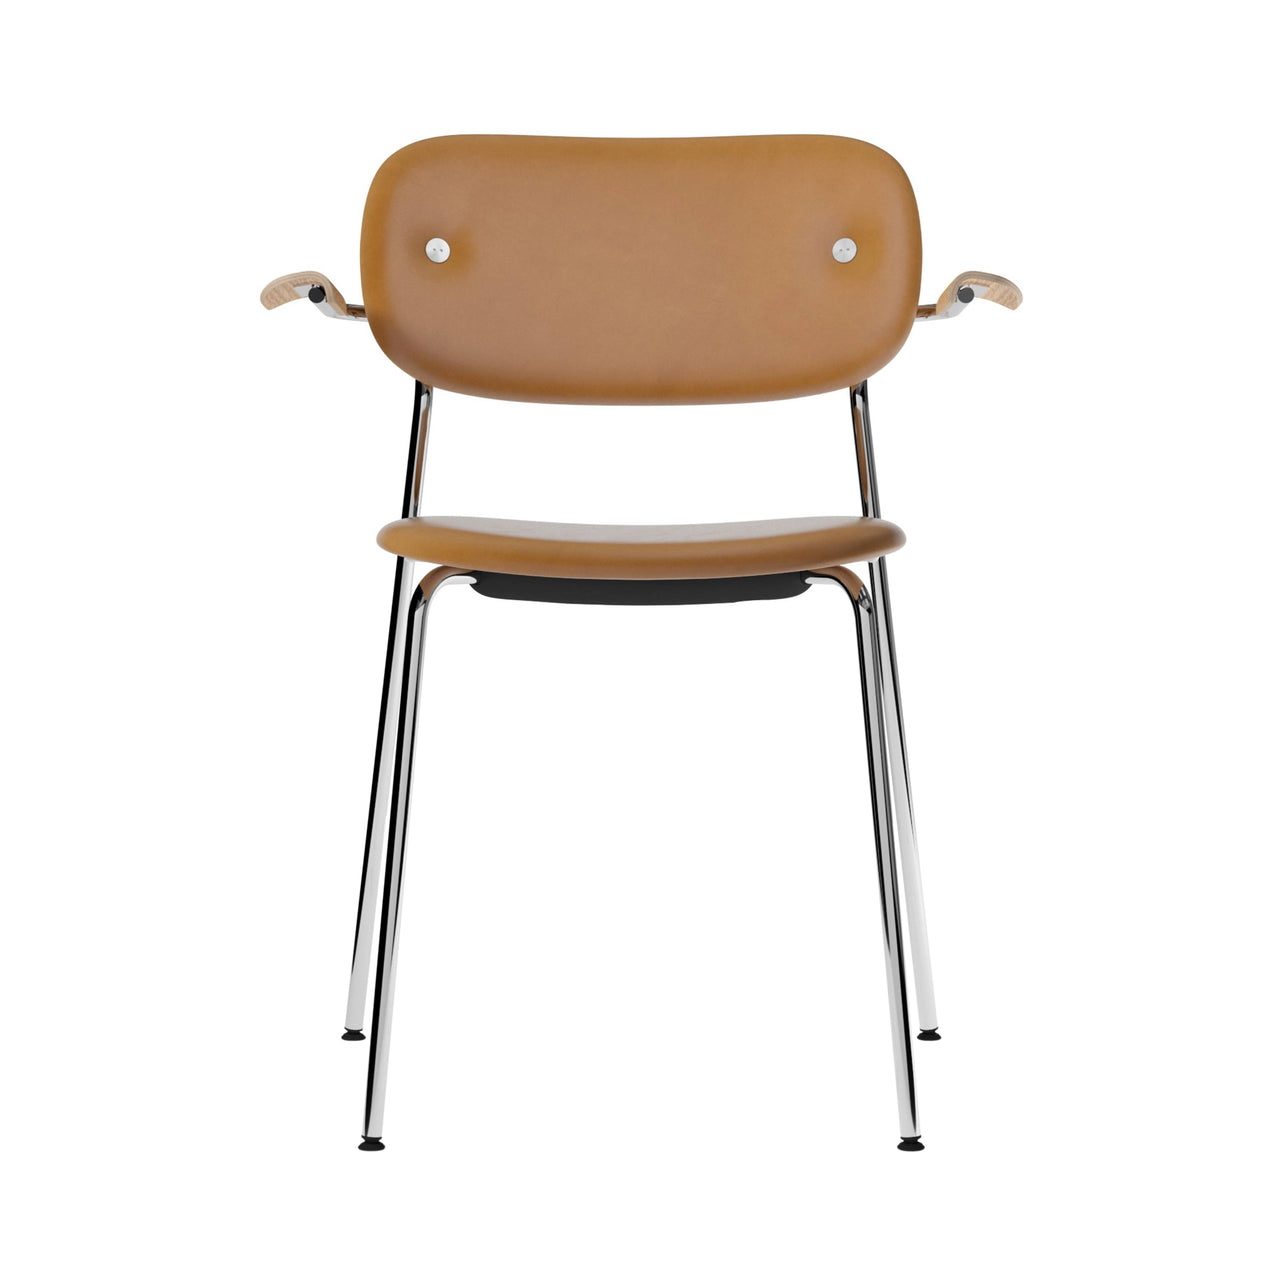 Co Chair with Armrests: Fully Upholstered + Chrome + Natural Oak + Dakar 0250